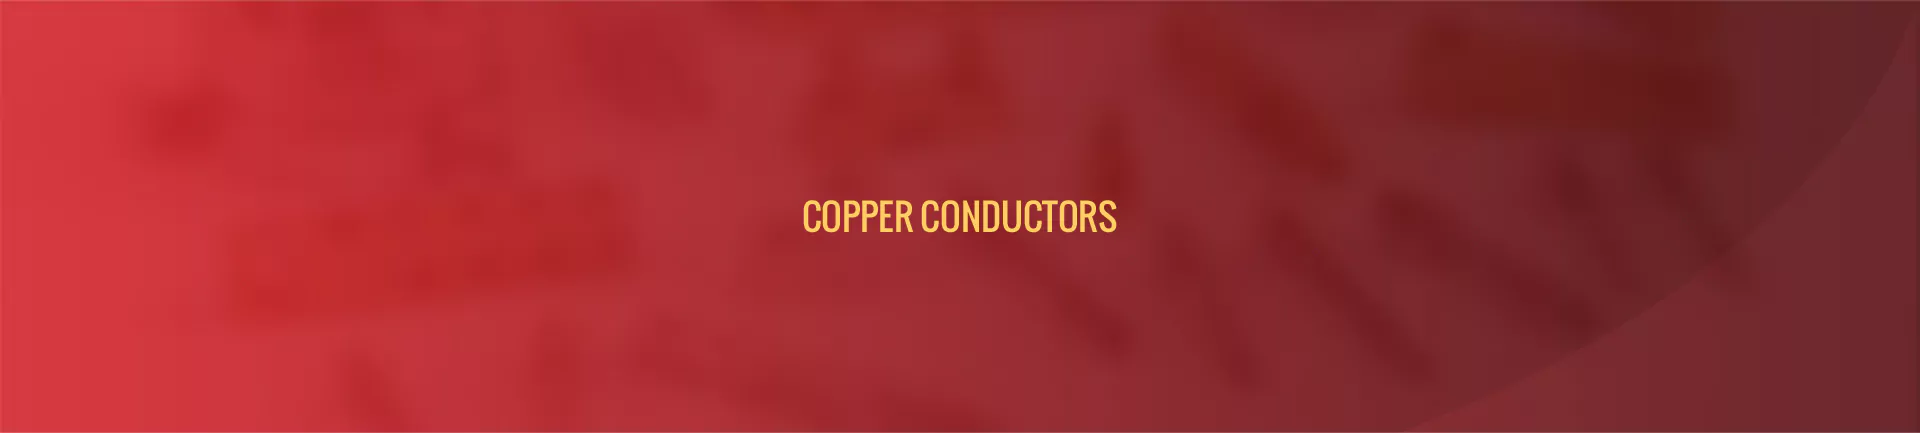 copper-conductors-banner